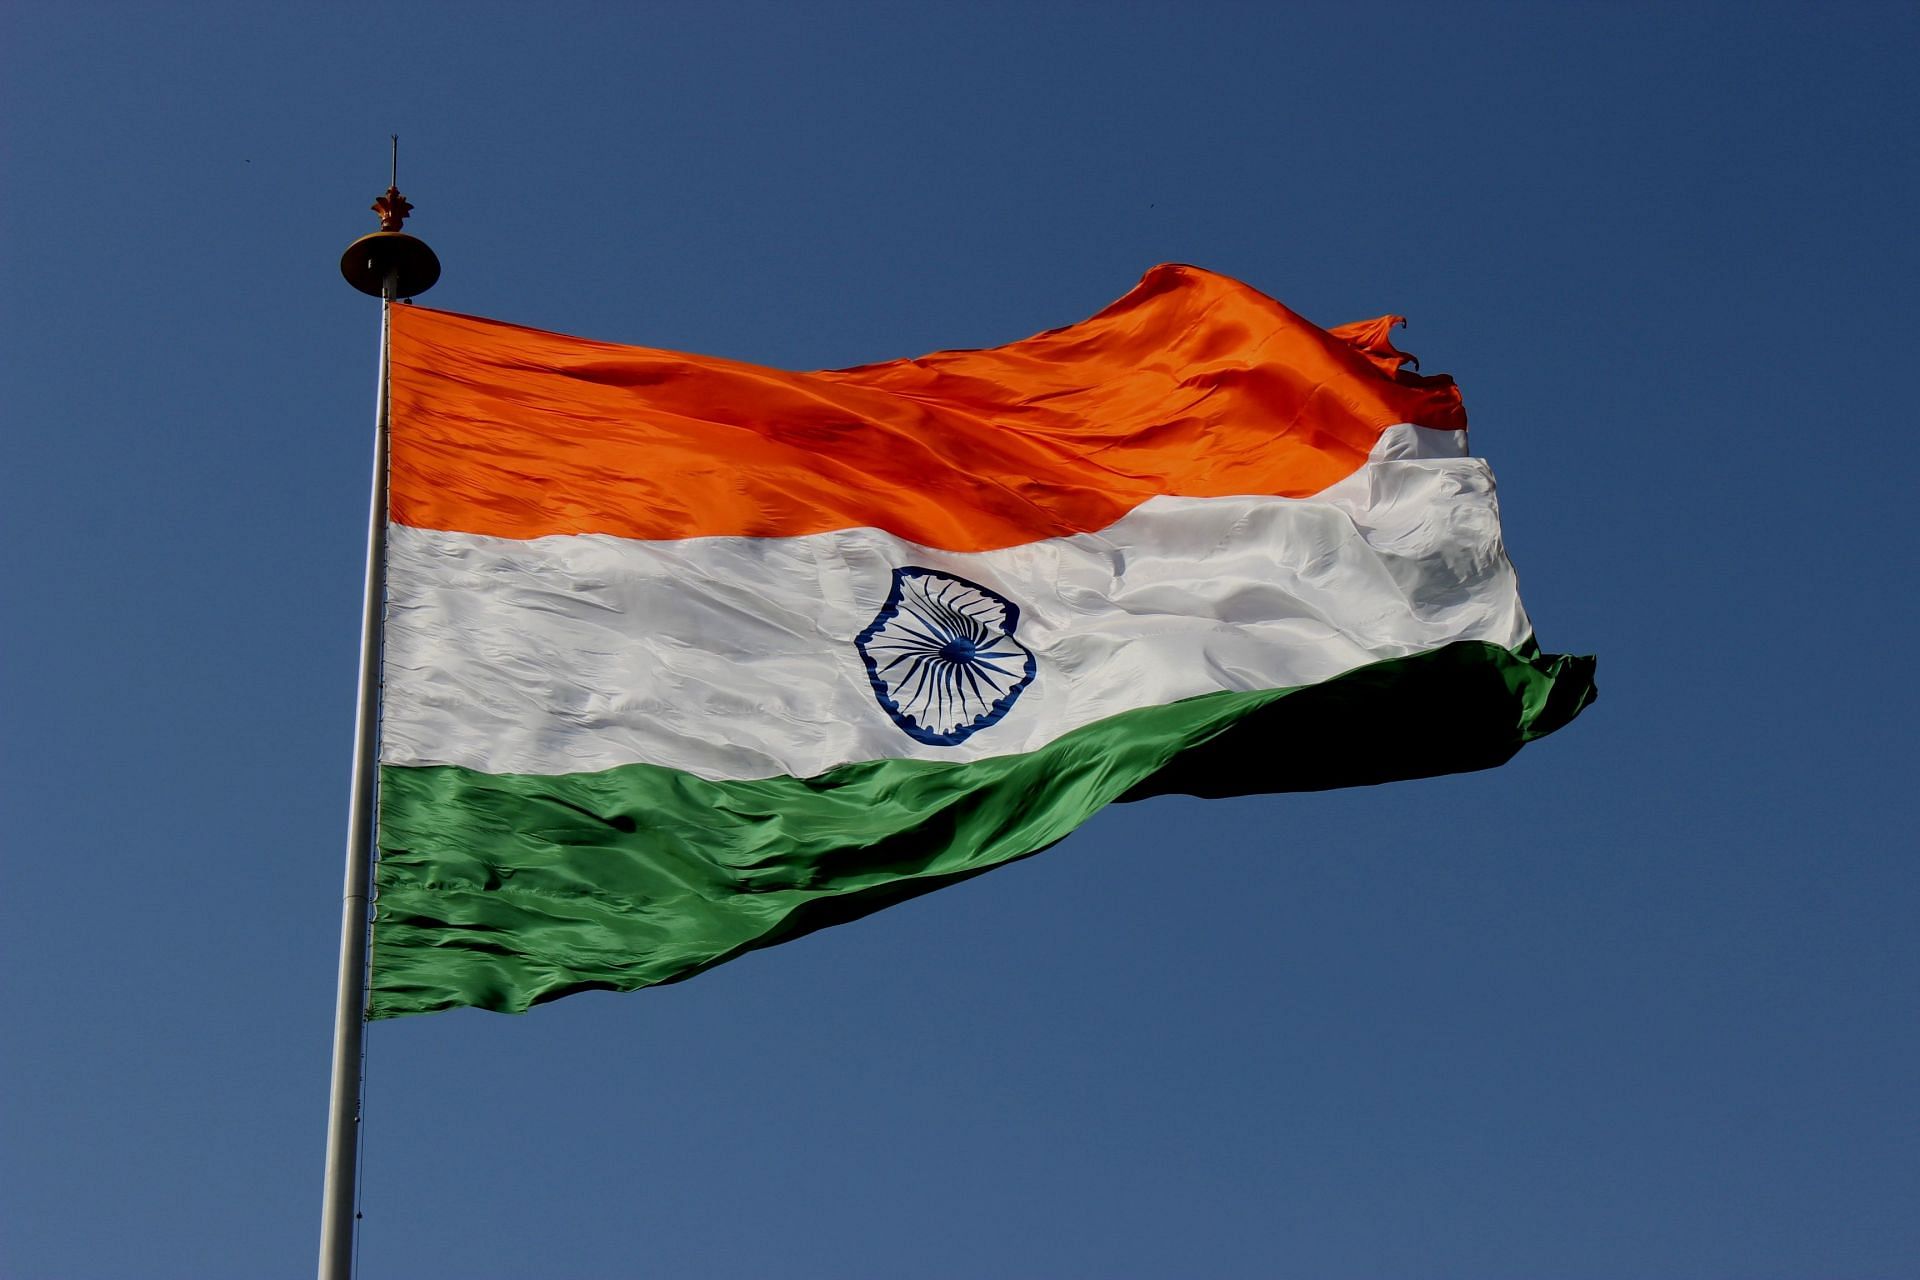 We are enabling Divyangjan to hoist tricolor in Paralympics: PM Modi (Image via Pexels)